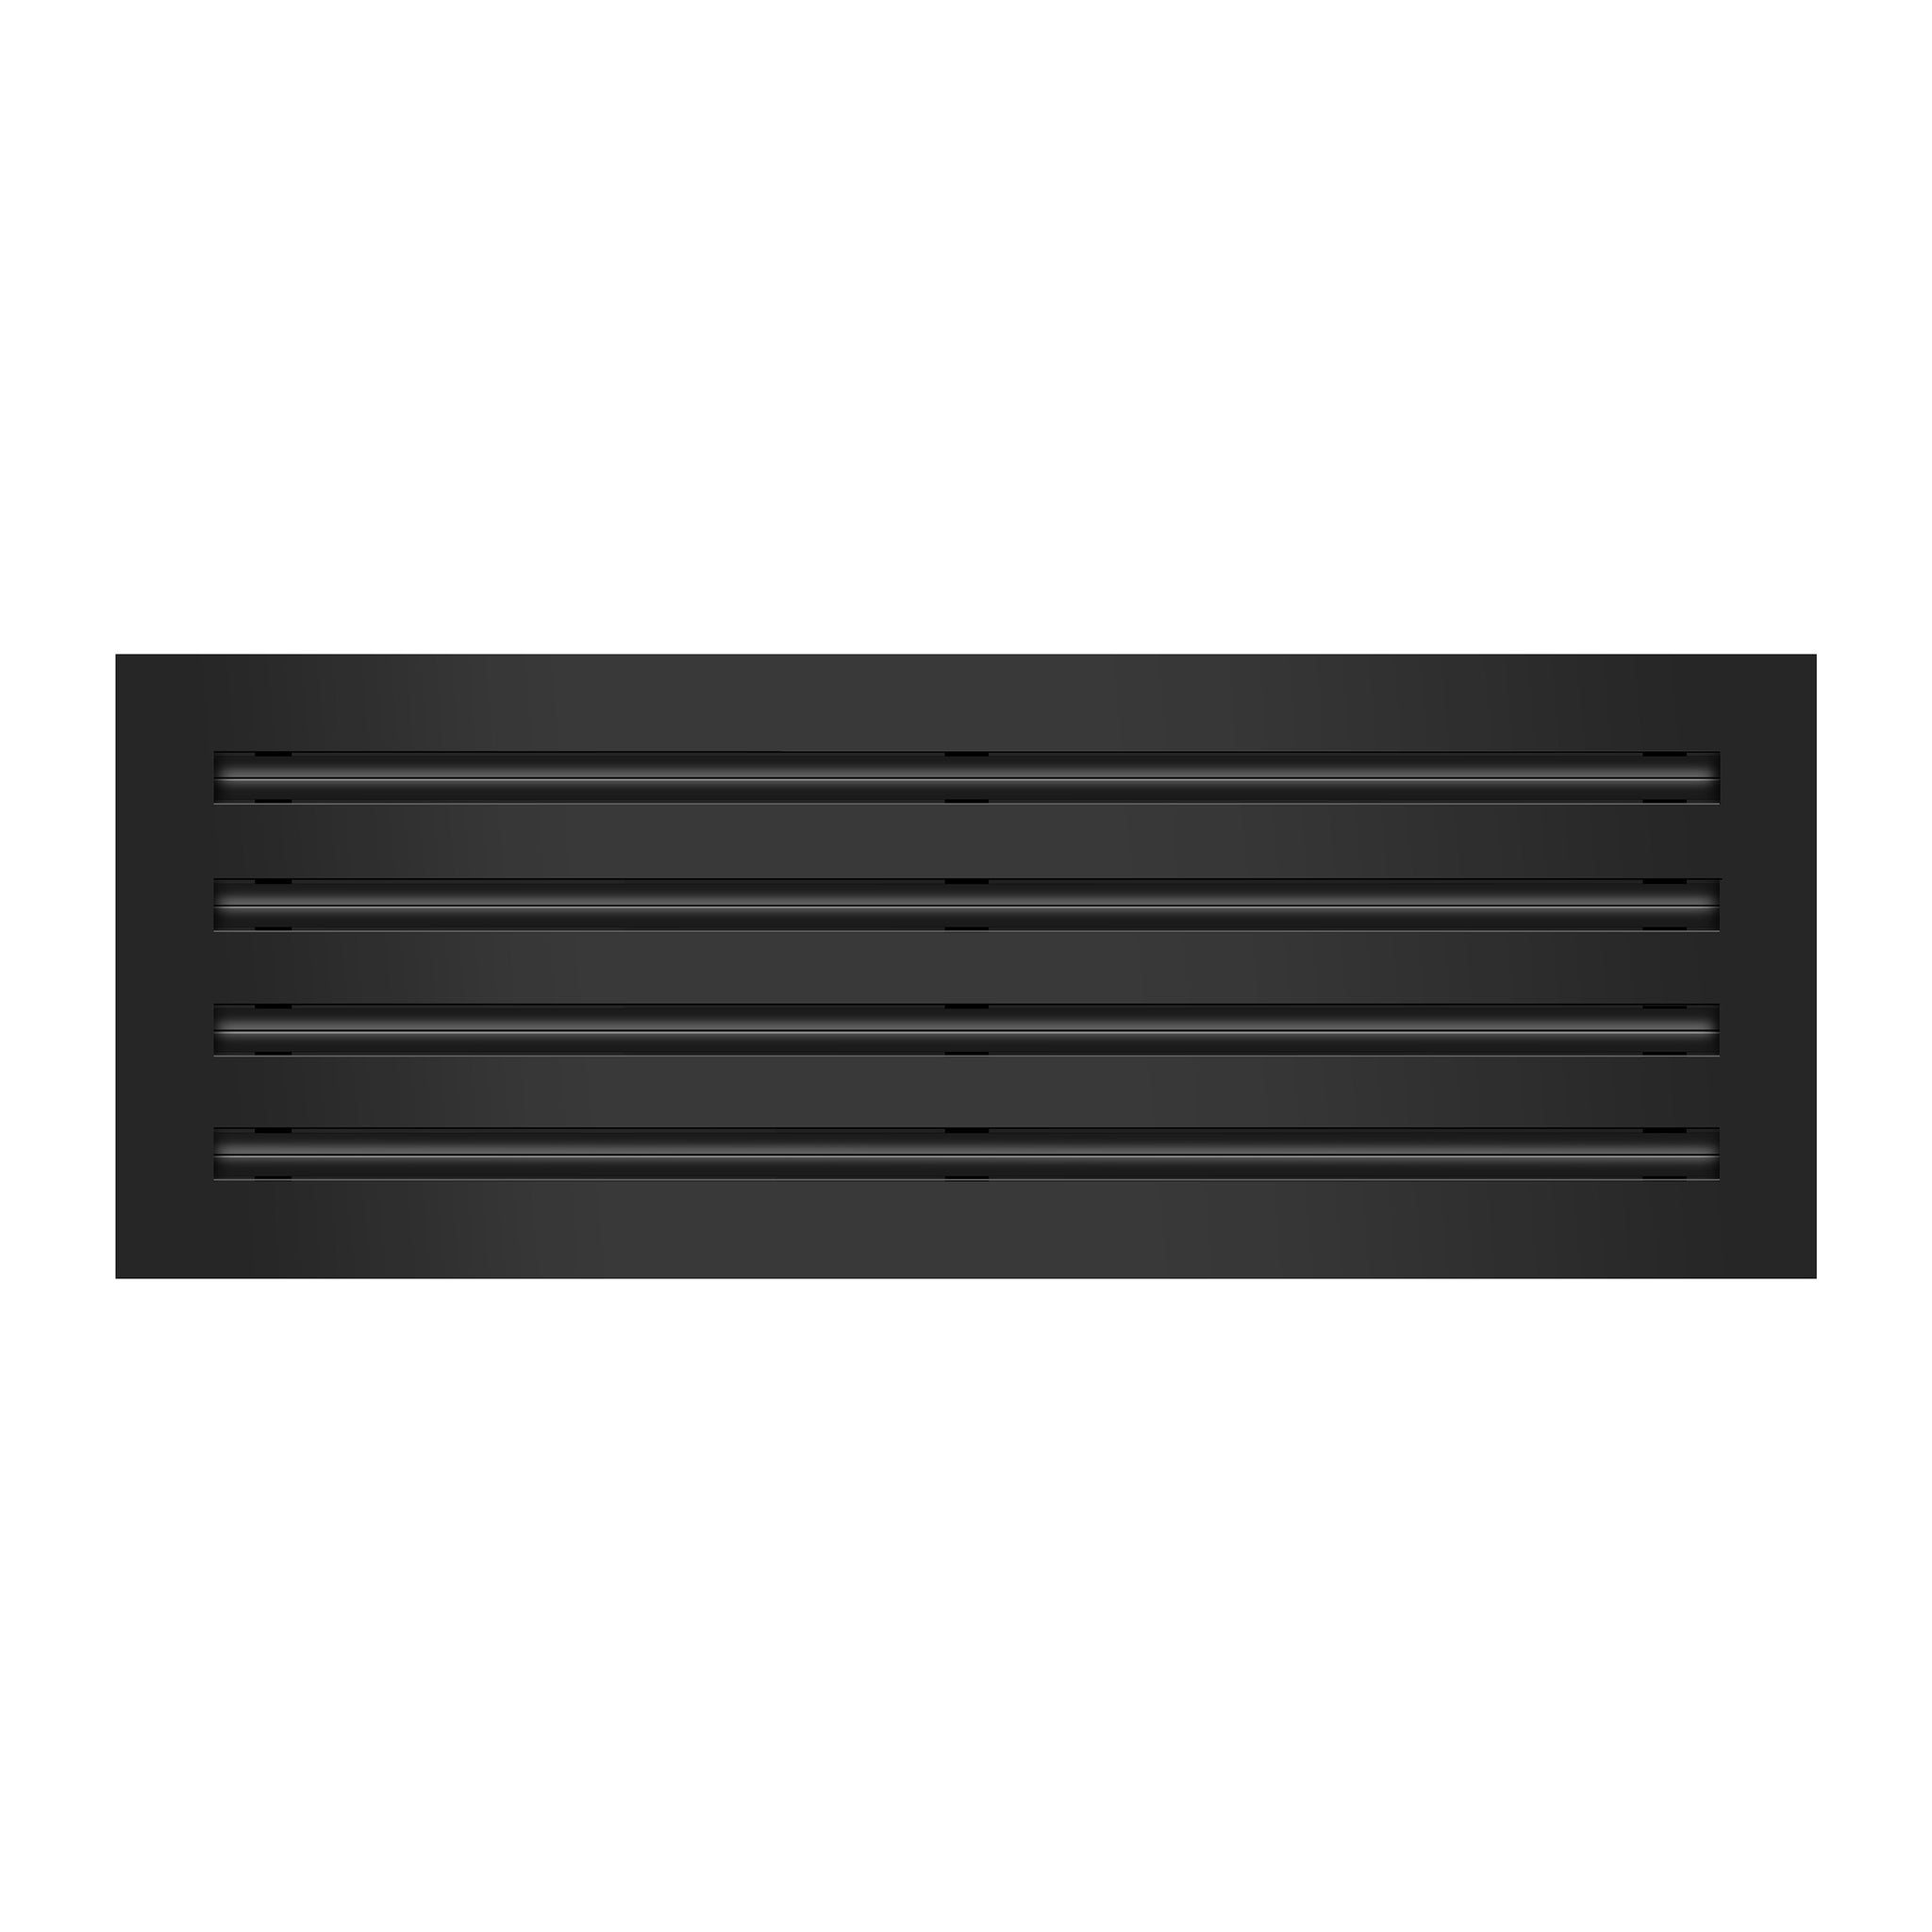 Front View of 22x8 Modern Air Vent Cover Black - 22x8 Standard Linear Slot Diffuser Black - Texas Buildmart